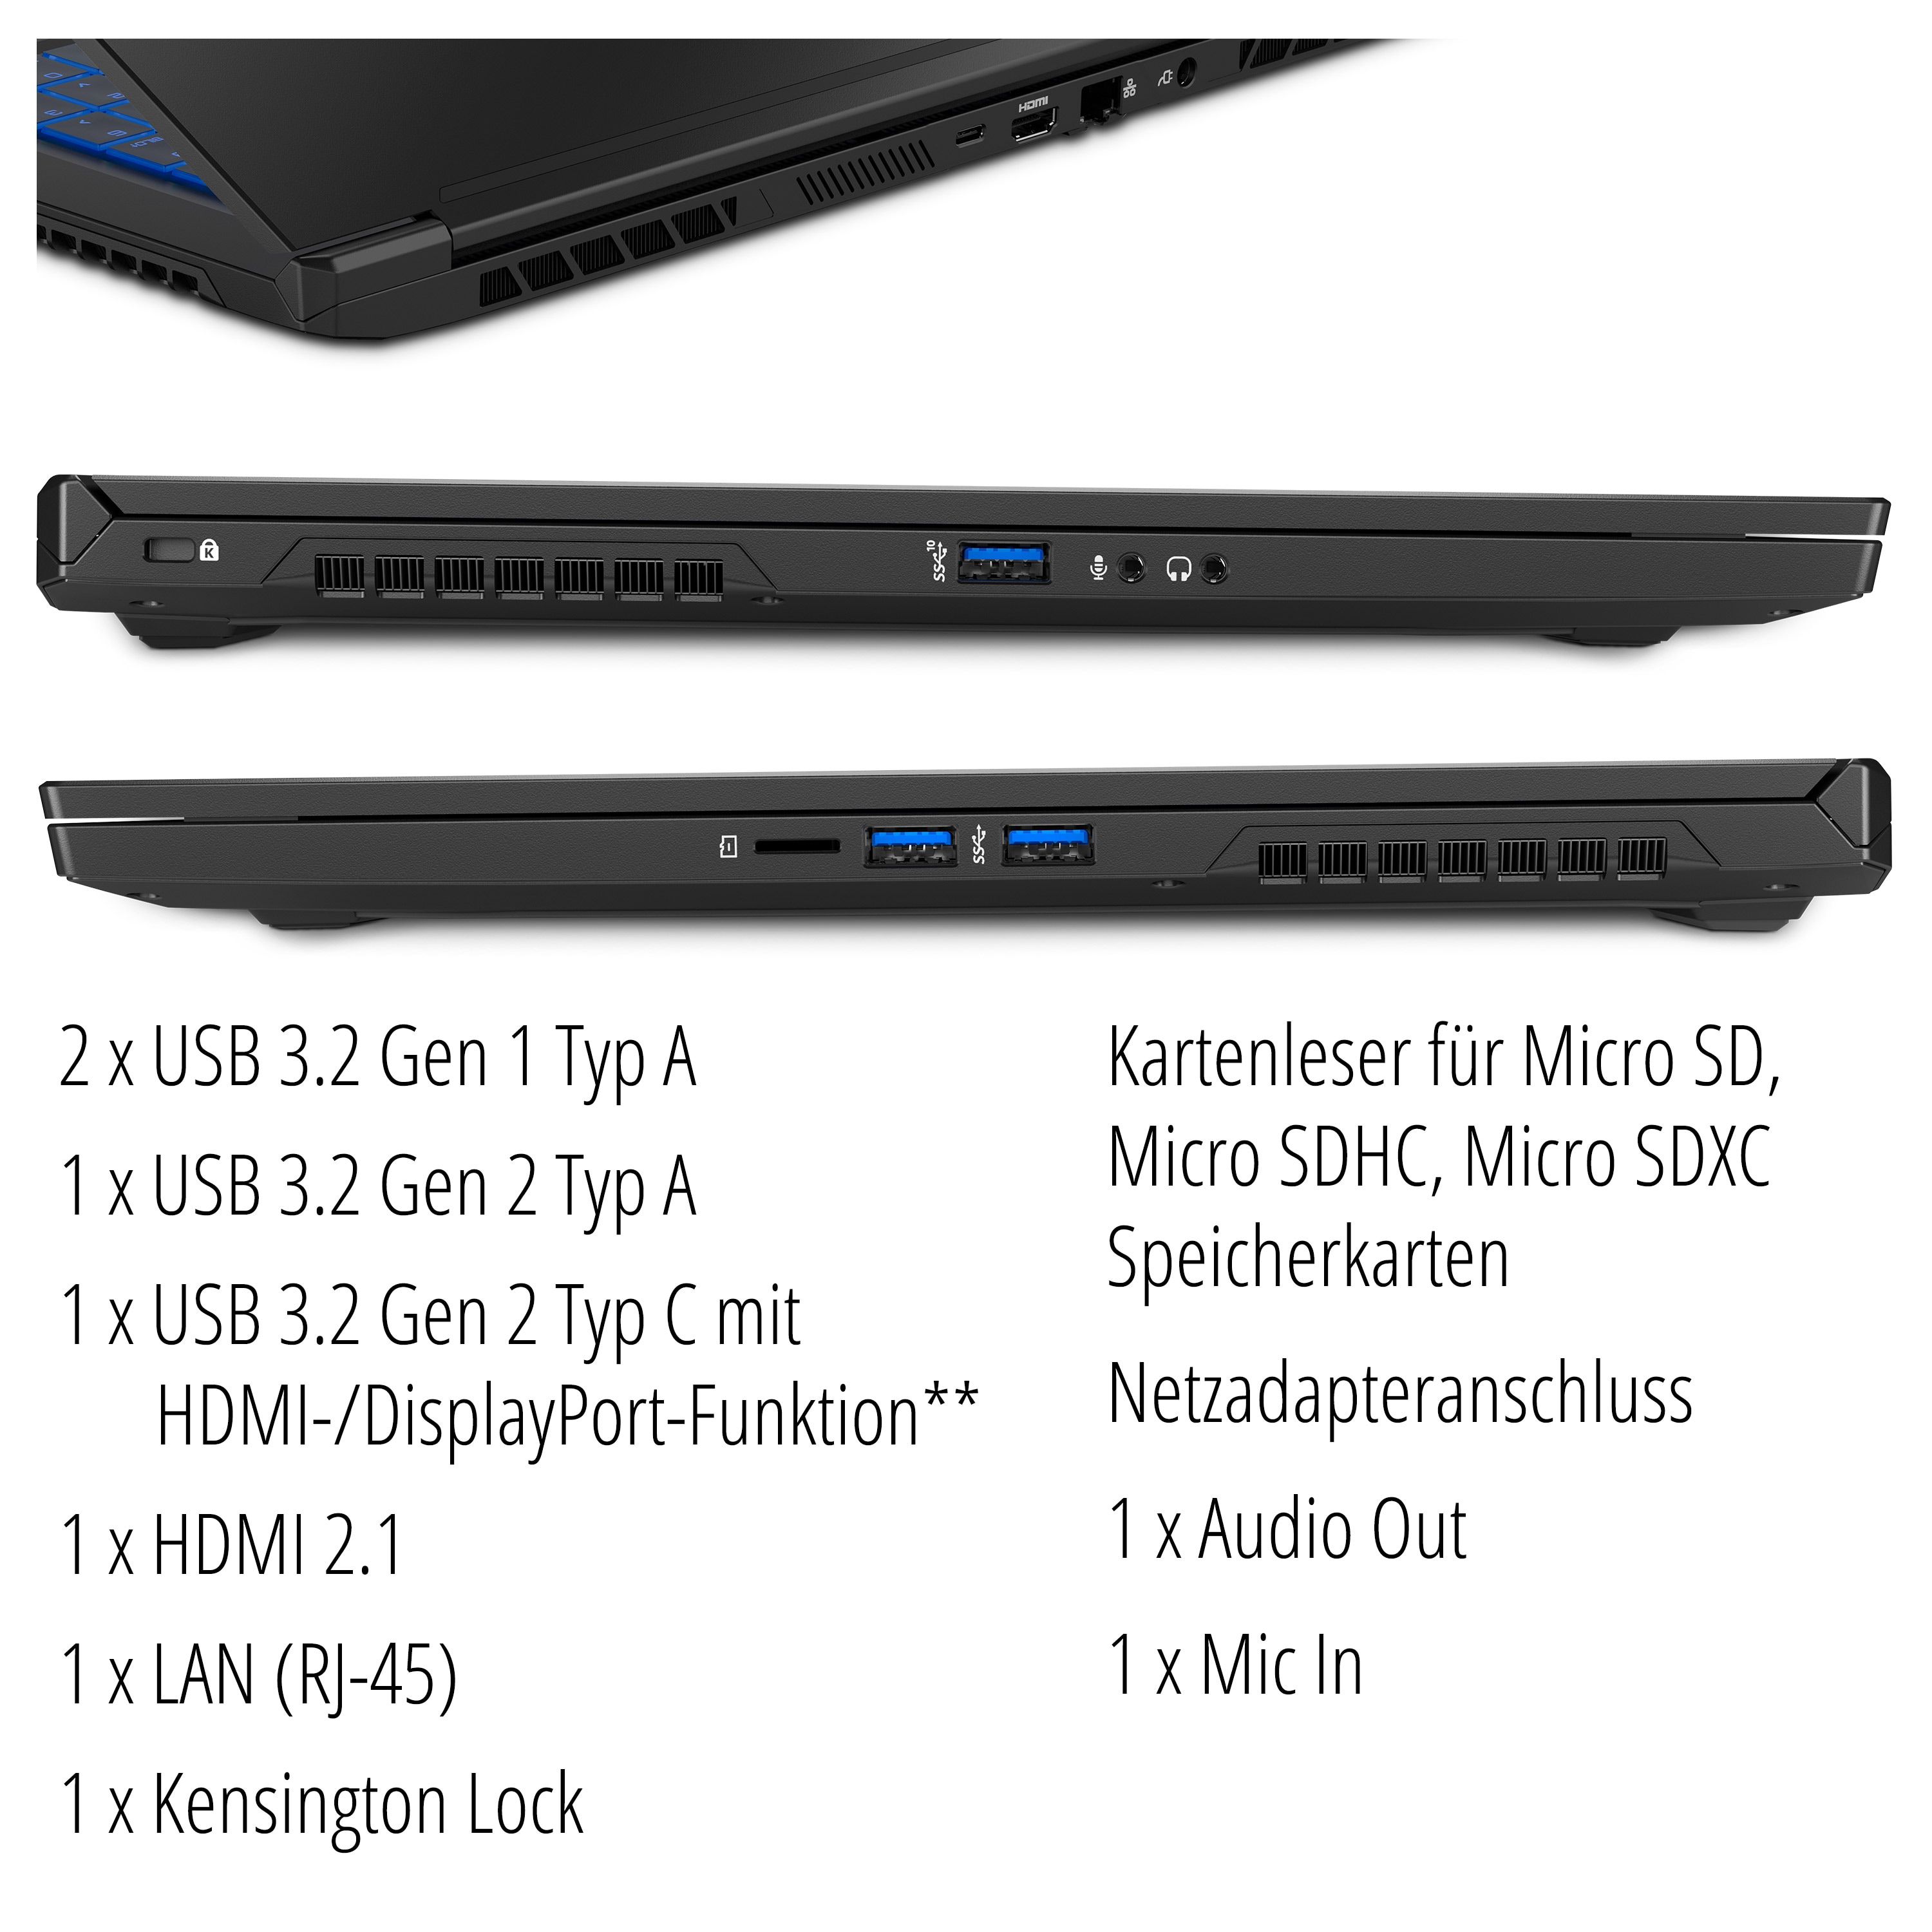 MEDION® ERAZER® Beast X25, AMD Ryzen™ 7 5800H, Windows 11 Home, 43,9 cm (17,3") FHD Display mit 240 Hz, NVIDIA® GeForce RTX™ 3080, 1 TB PCIe SSD, 32 GB RAM, High-End Gaming Notebook